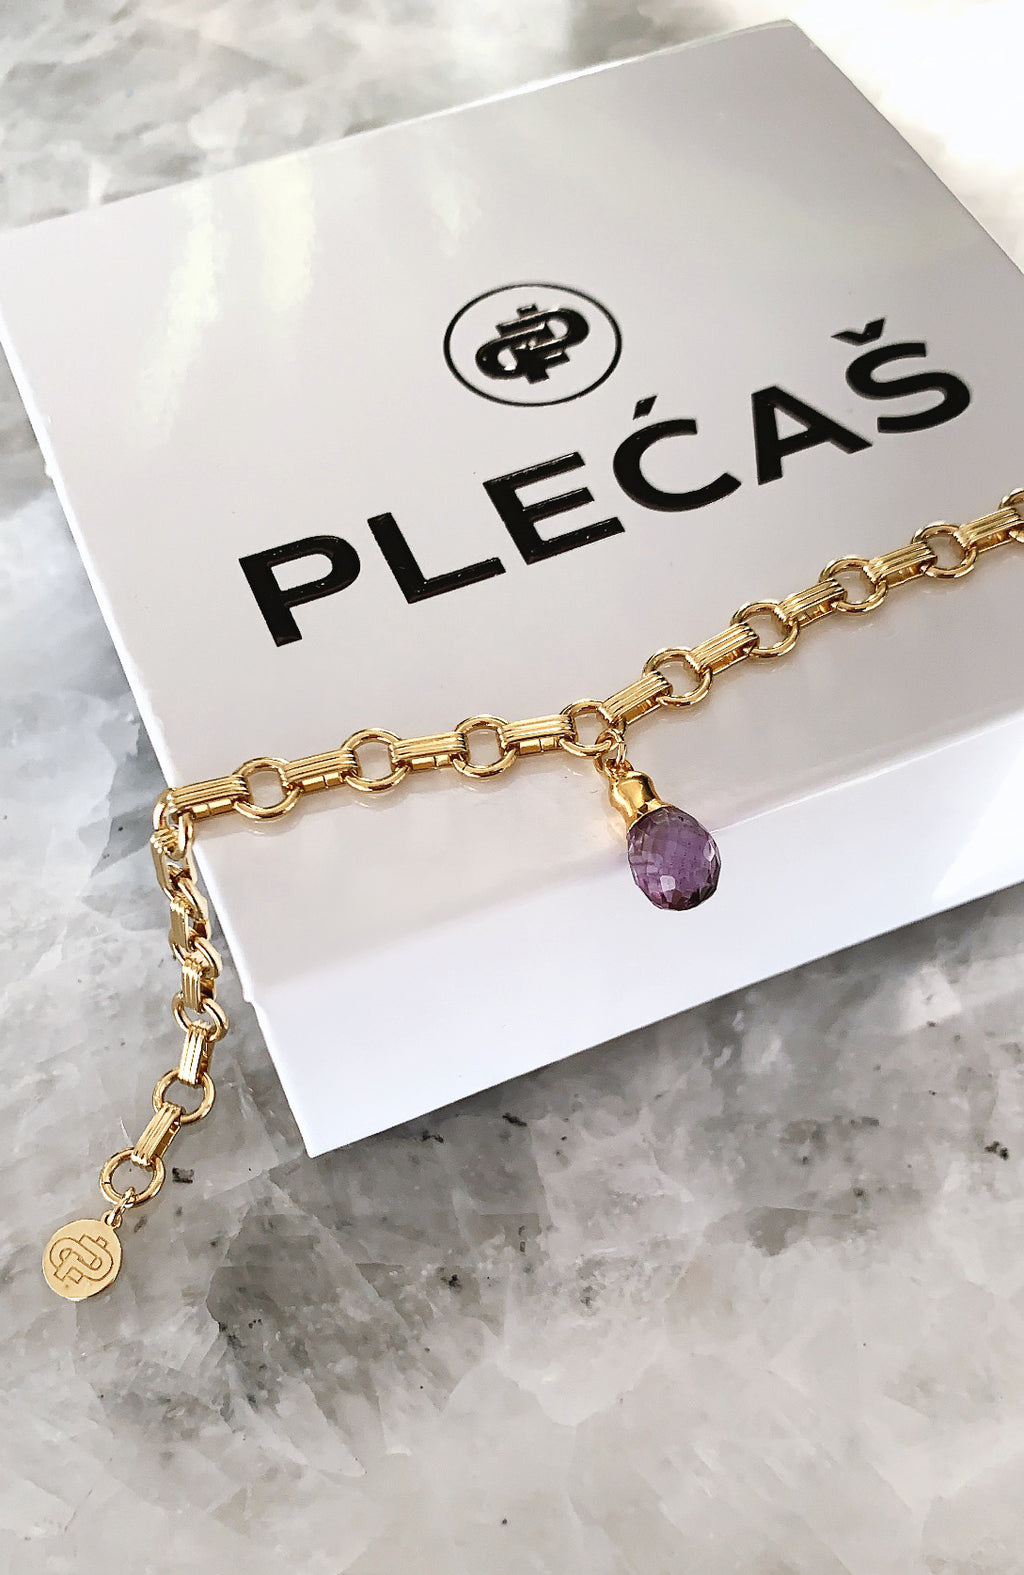 Luna Amethyst PLECAS bracelet on top of PLECAS box